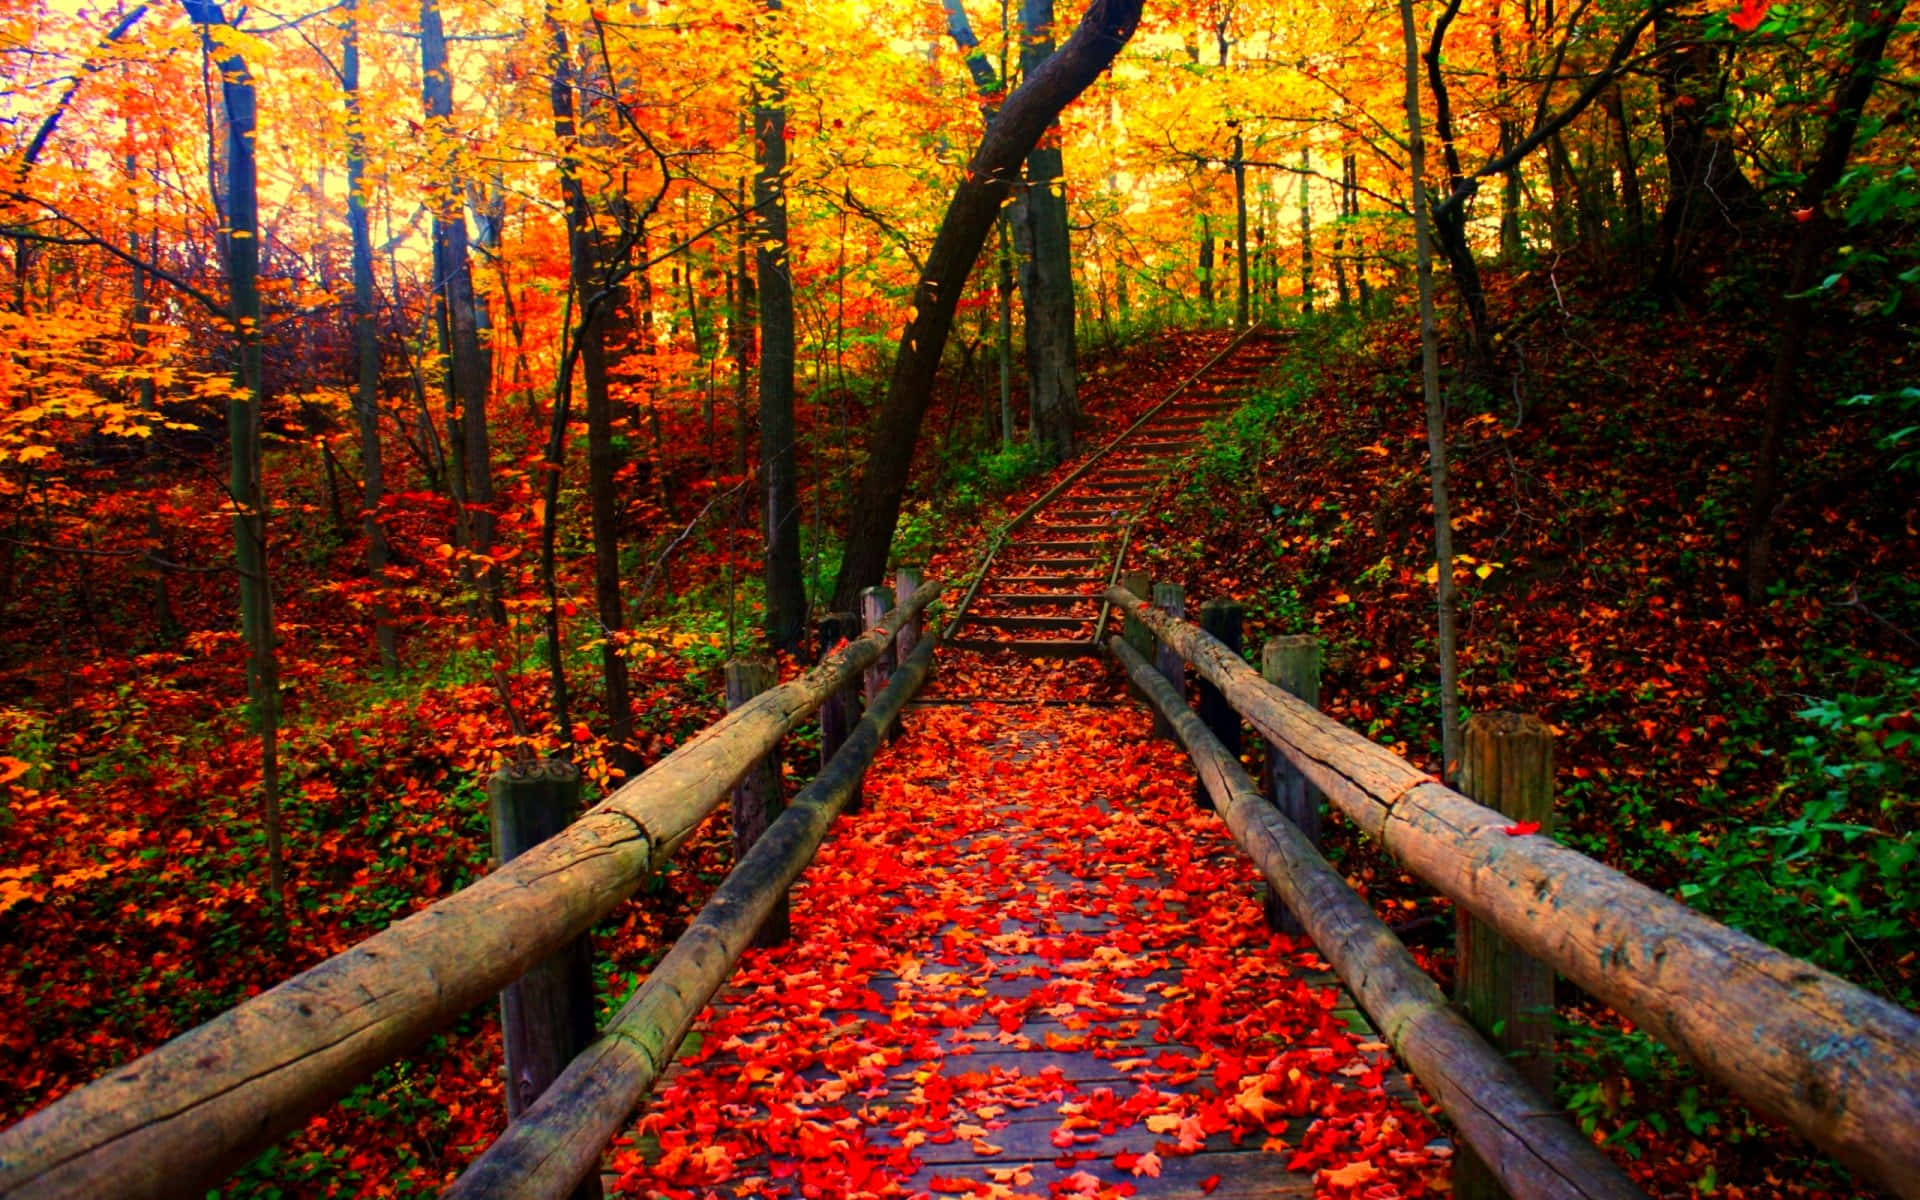 Enjoy the beauty of Autumn season!